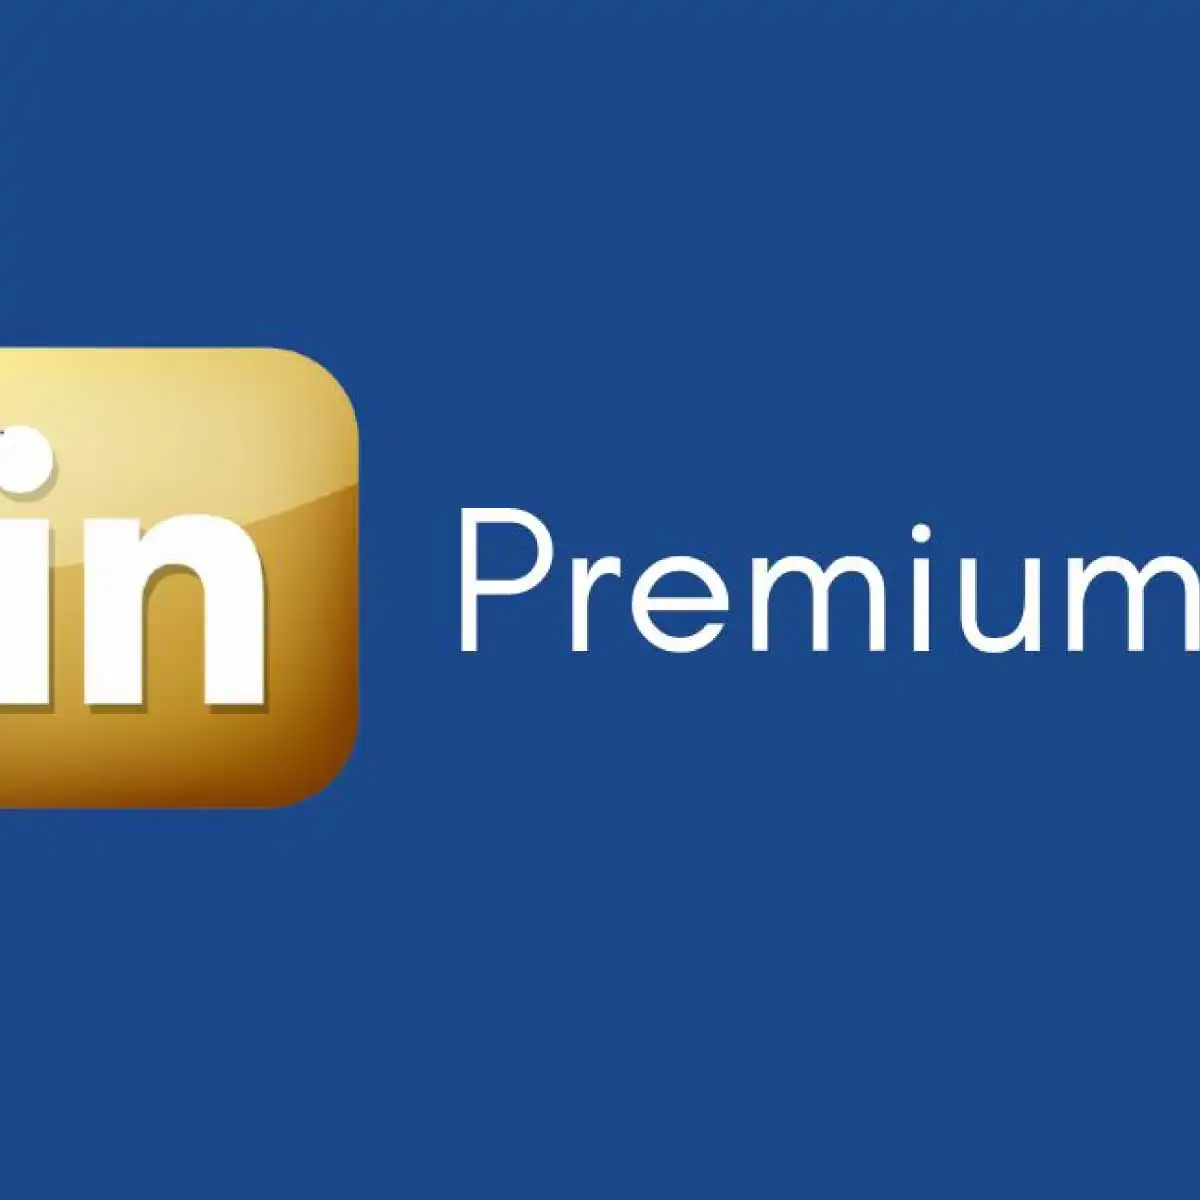 Linkedin Premium